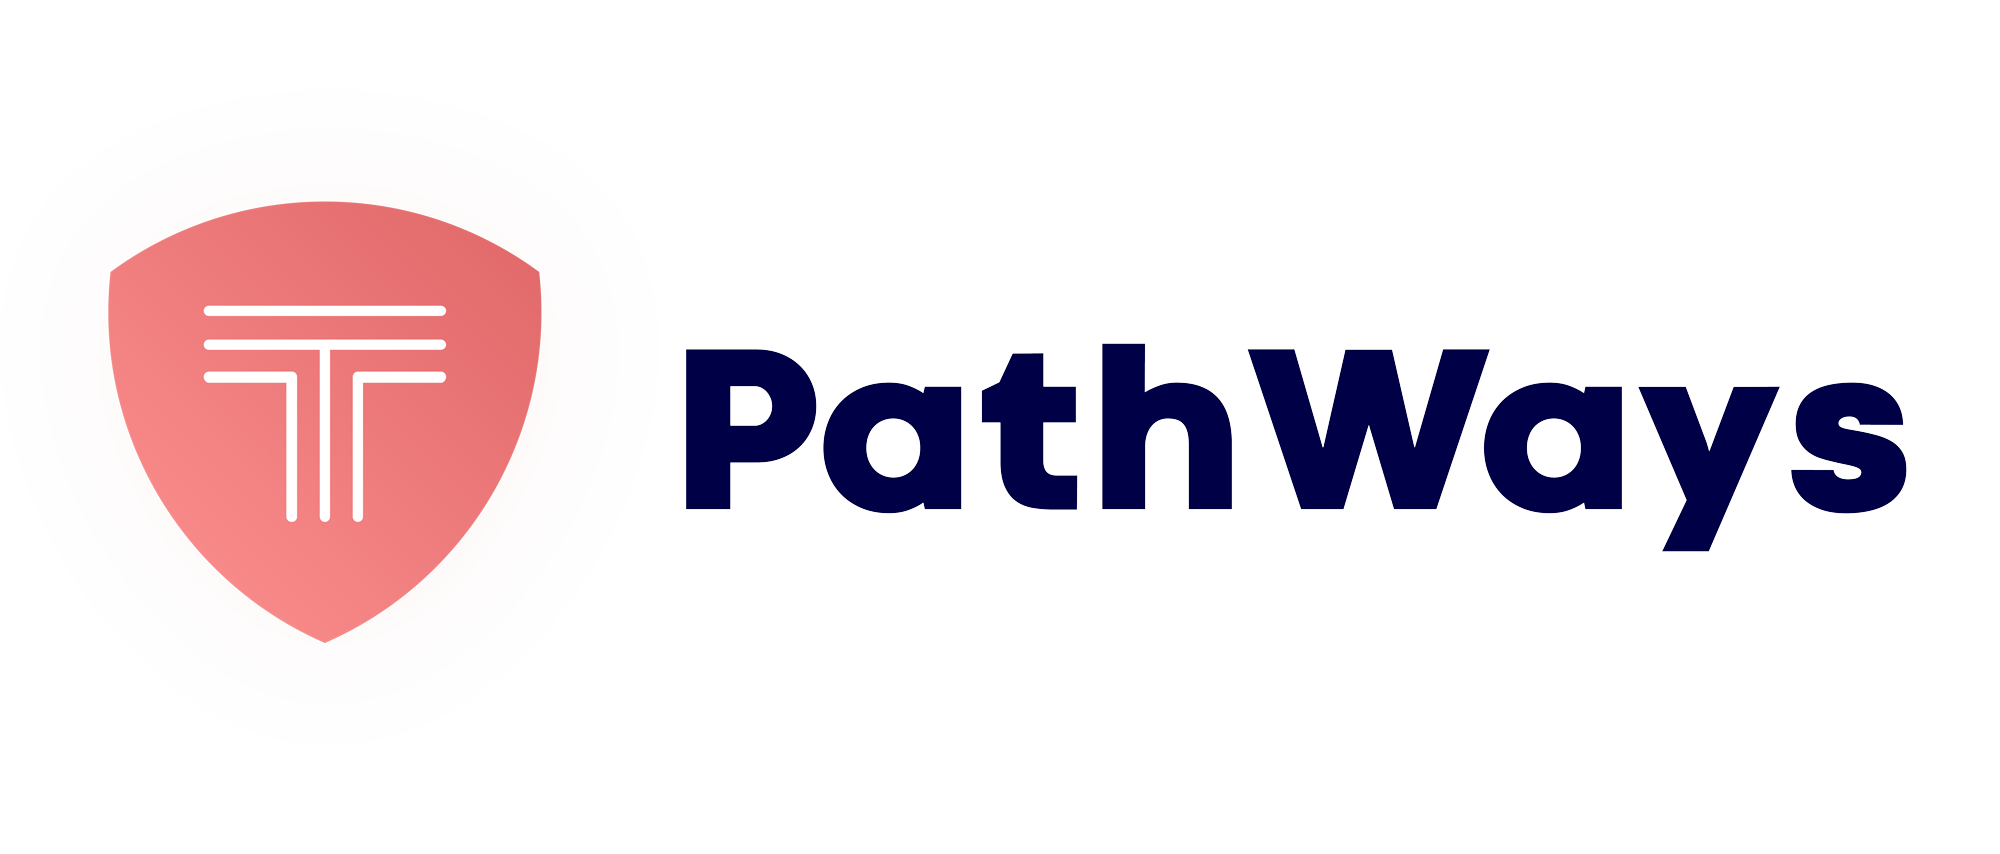 pathways logo